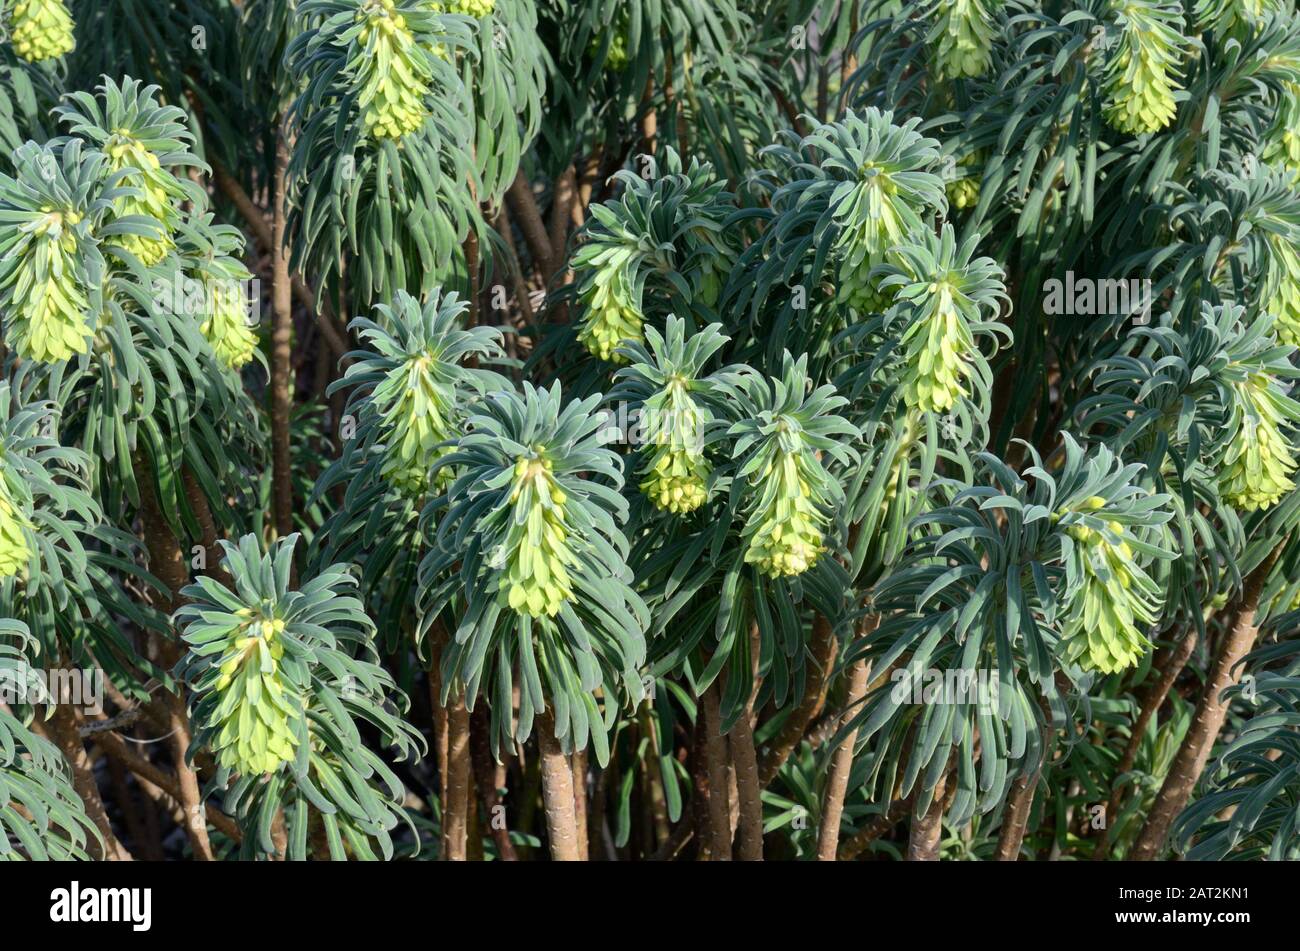 Euphorbia caracteres forestcate spurge perenne planta perenne plata gris hojas espigas de flores amarillas Foto de stock